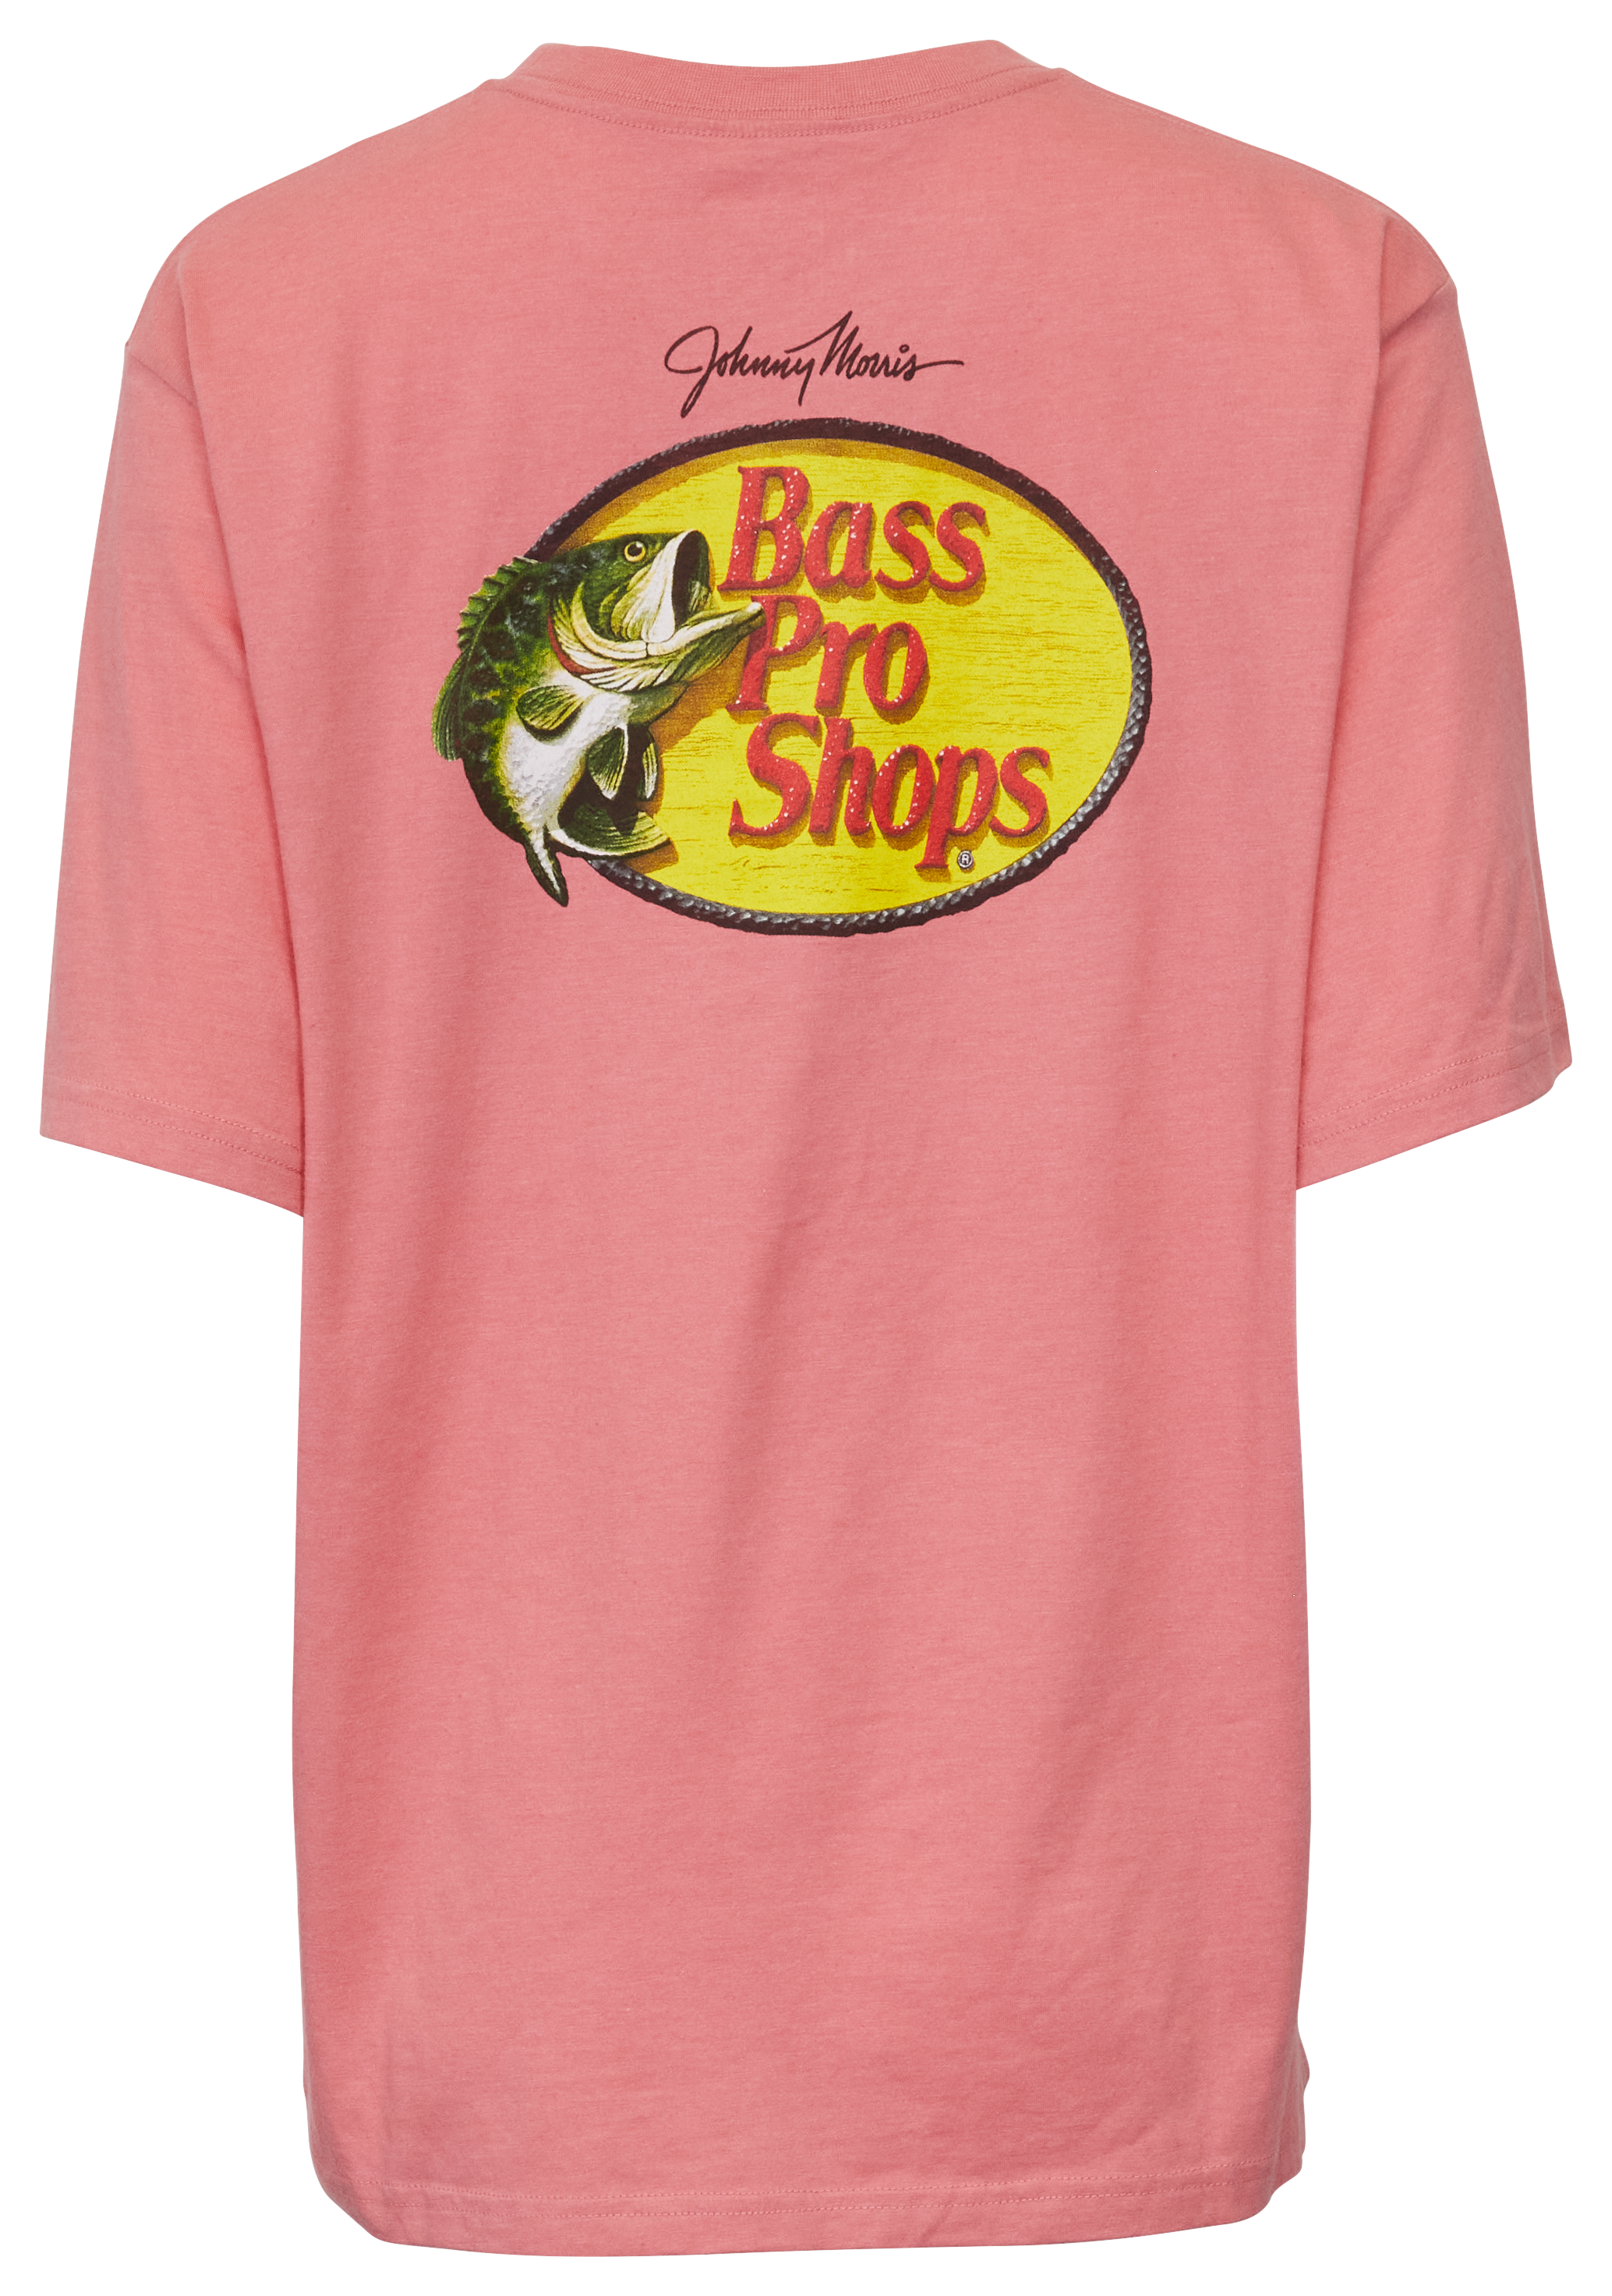 Bass Pro Shops Memphis Woodcut Short-Sleeve T-Shirt for Kids - Black - M